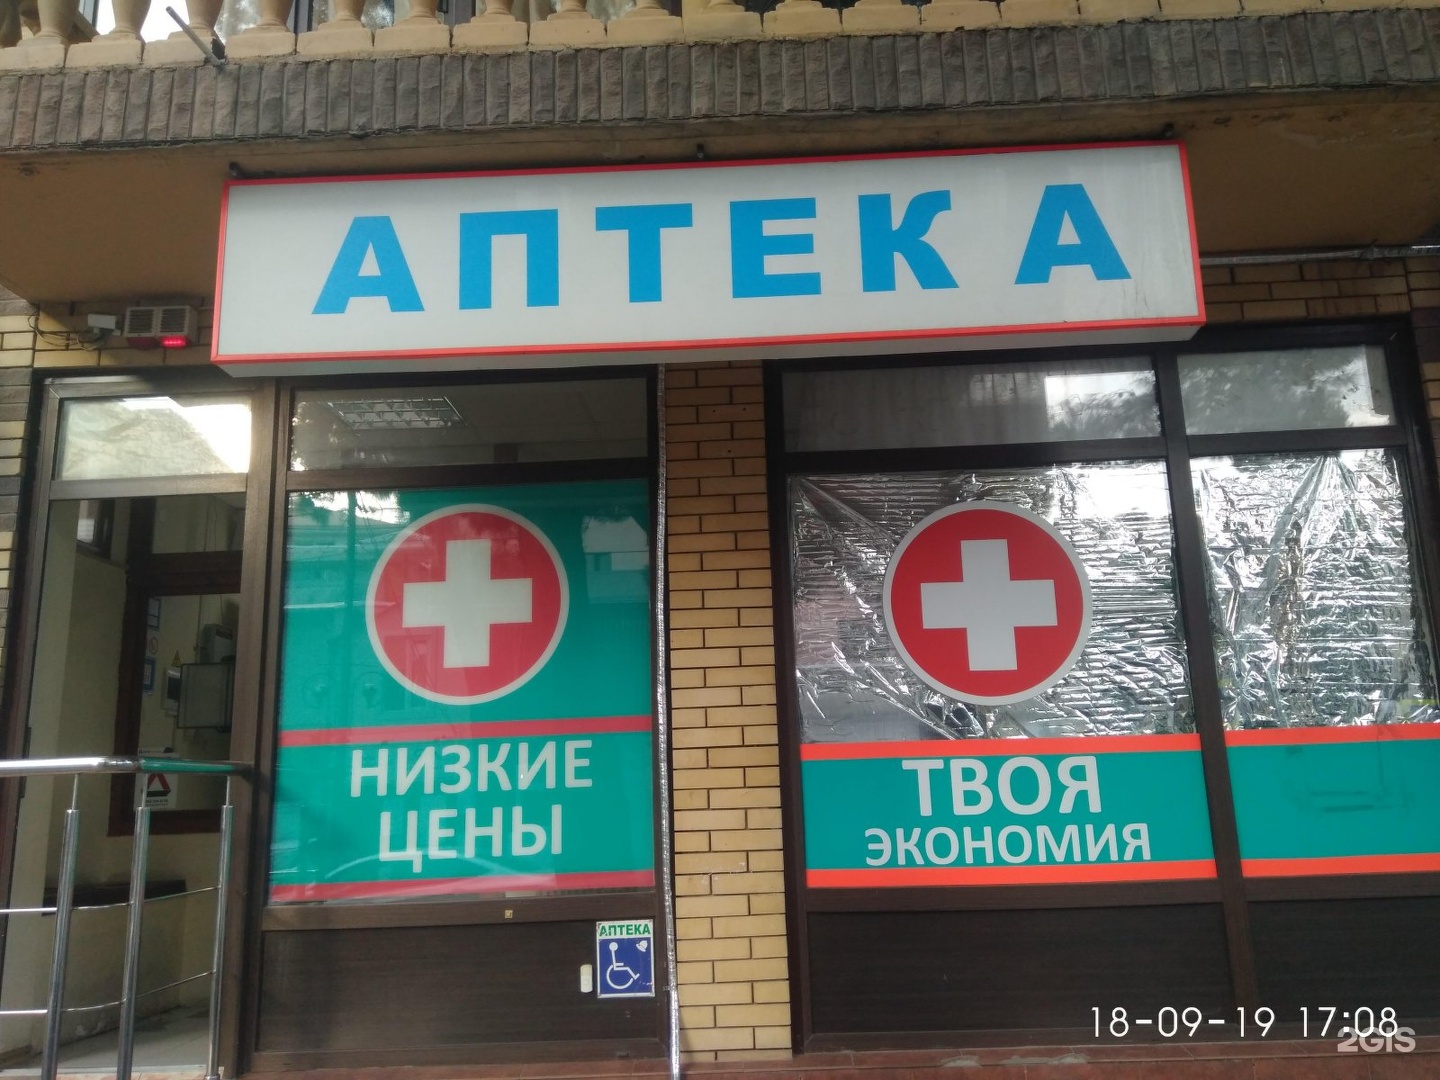 Заказать анапа аптека. Аптека твоя экономия. Круглосуточная аптека Анапа. Анапа социальная аптека на Крымской. Аптека твоя экономия фото.